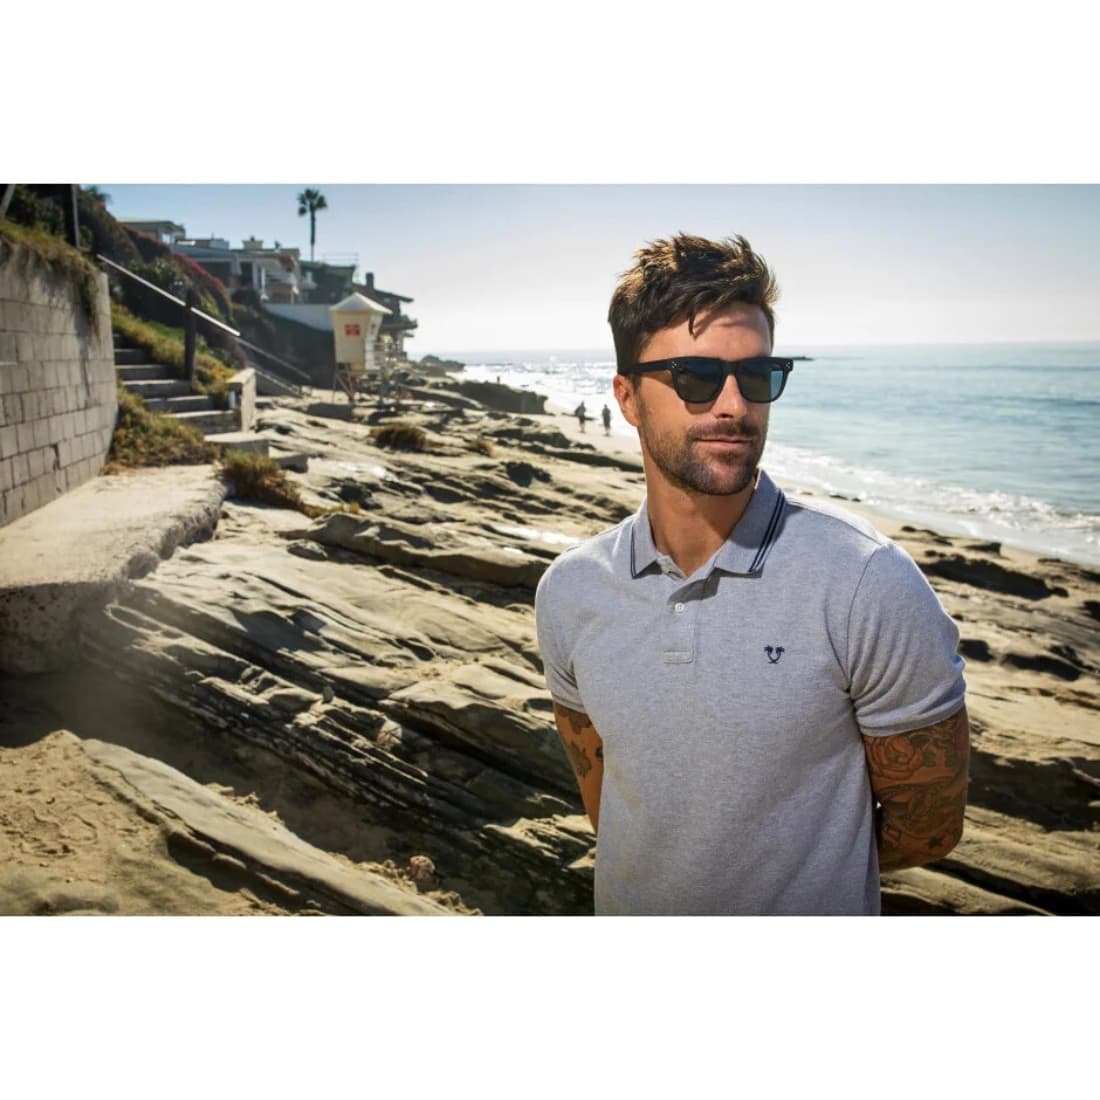 I-Sea Liam Polarised Sunglasses - Matt Black/Smoke Polarized Lens - Square/Rectangular Sunglasses by I-Sea